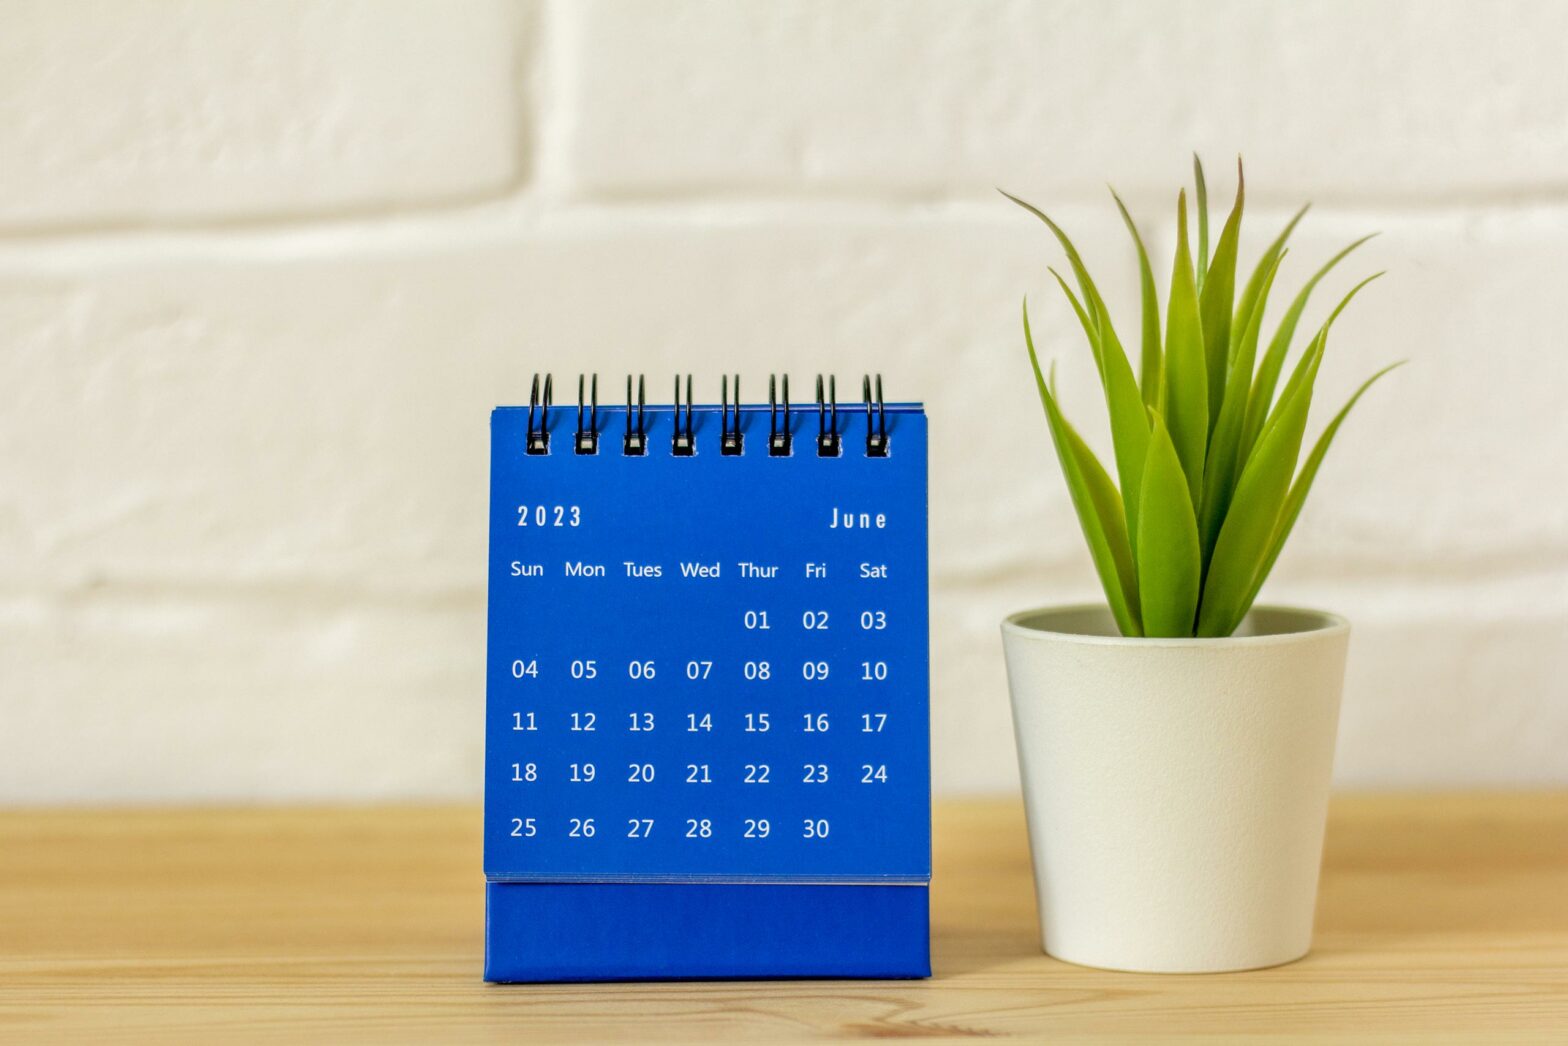 June 2023 desktop calendar for planning on the table